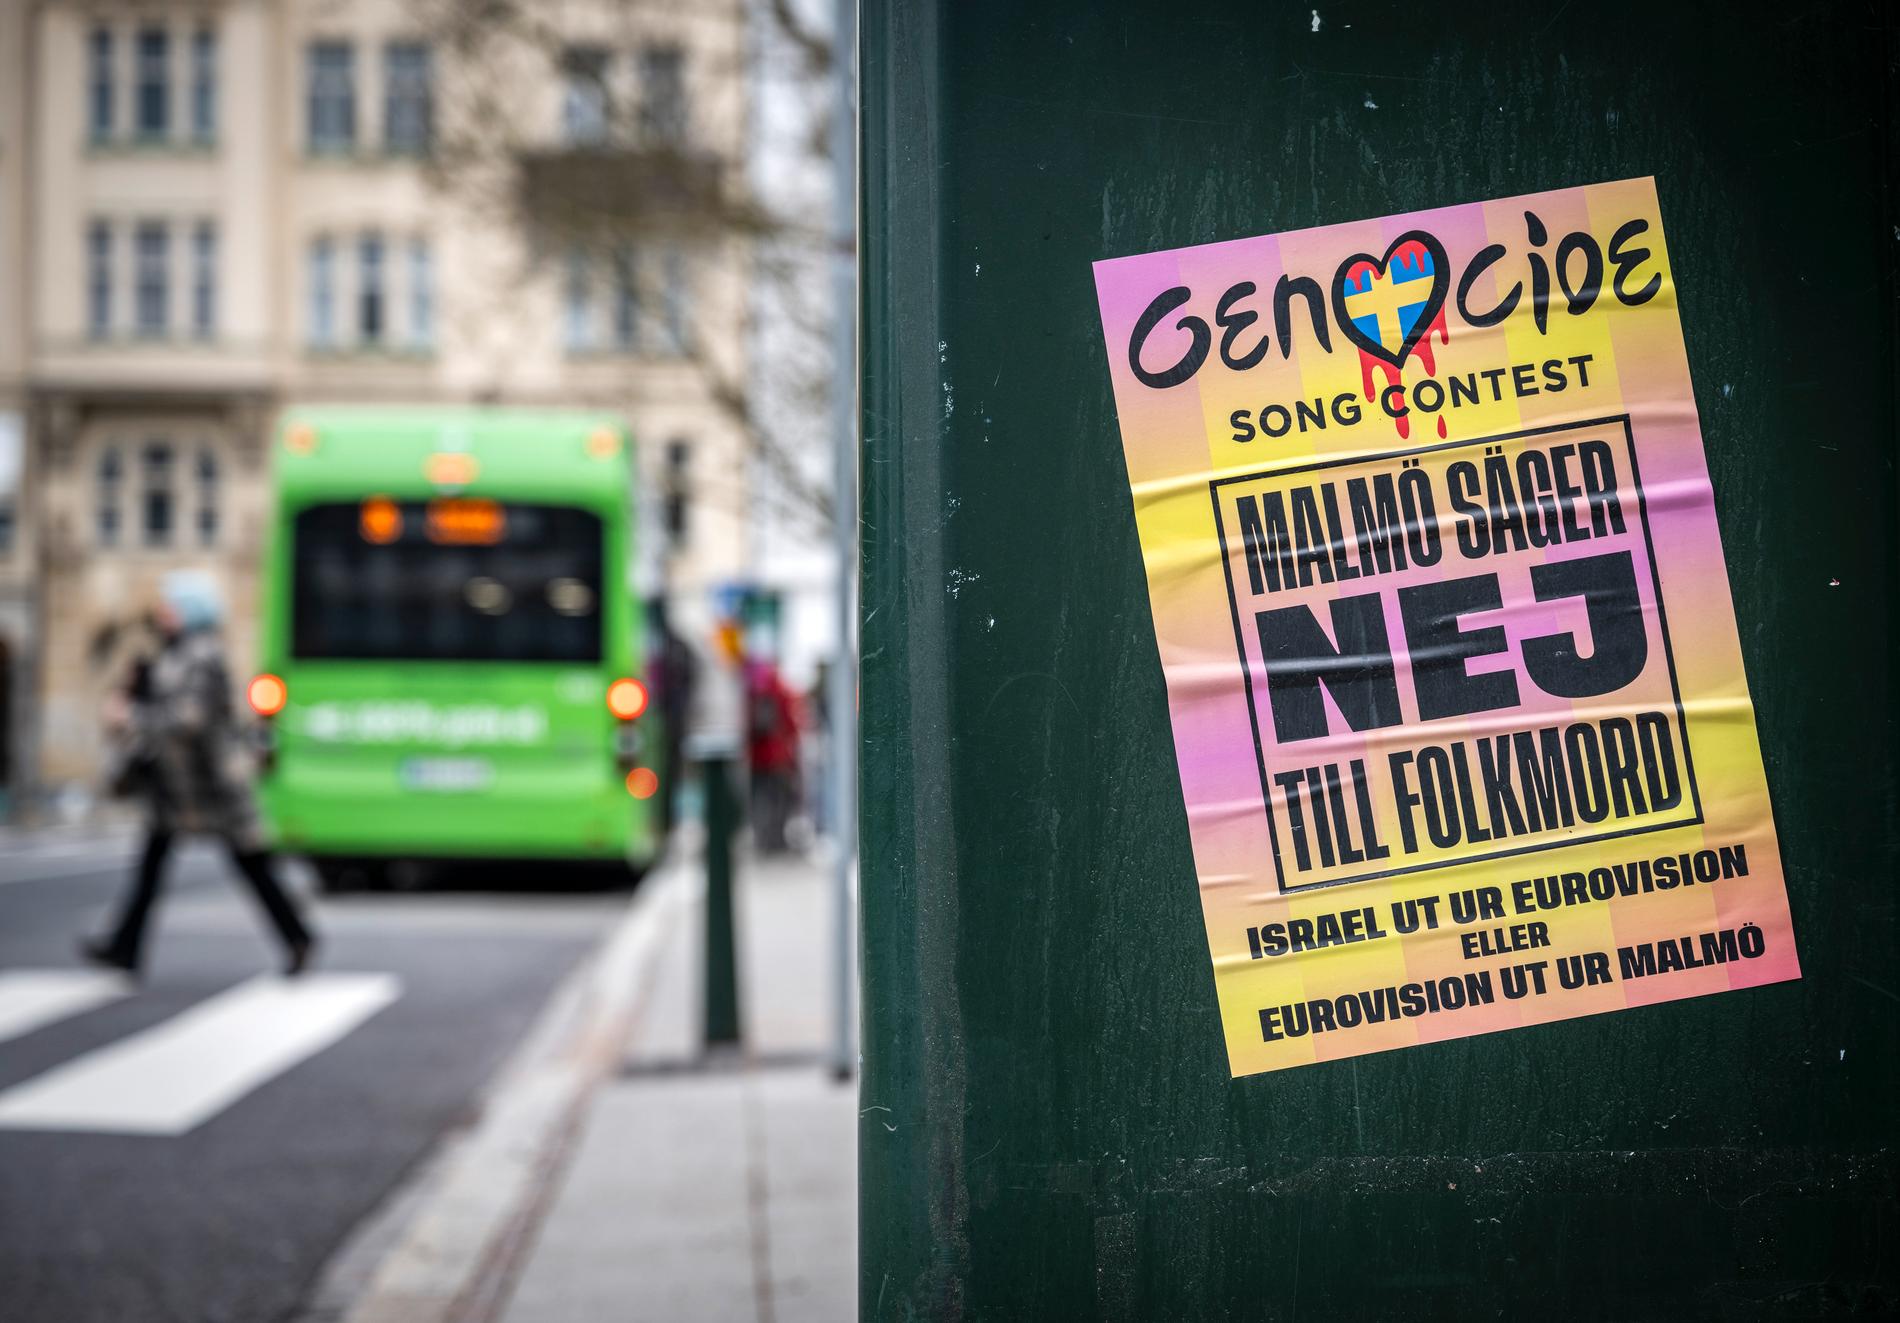 Affischer med budskapet "Genocide Song Contest – Israel ut ur Eurovision eller Eurovision ut ur Malmö" fanns runt om i Malmö på fredagen.